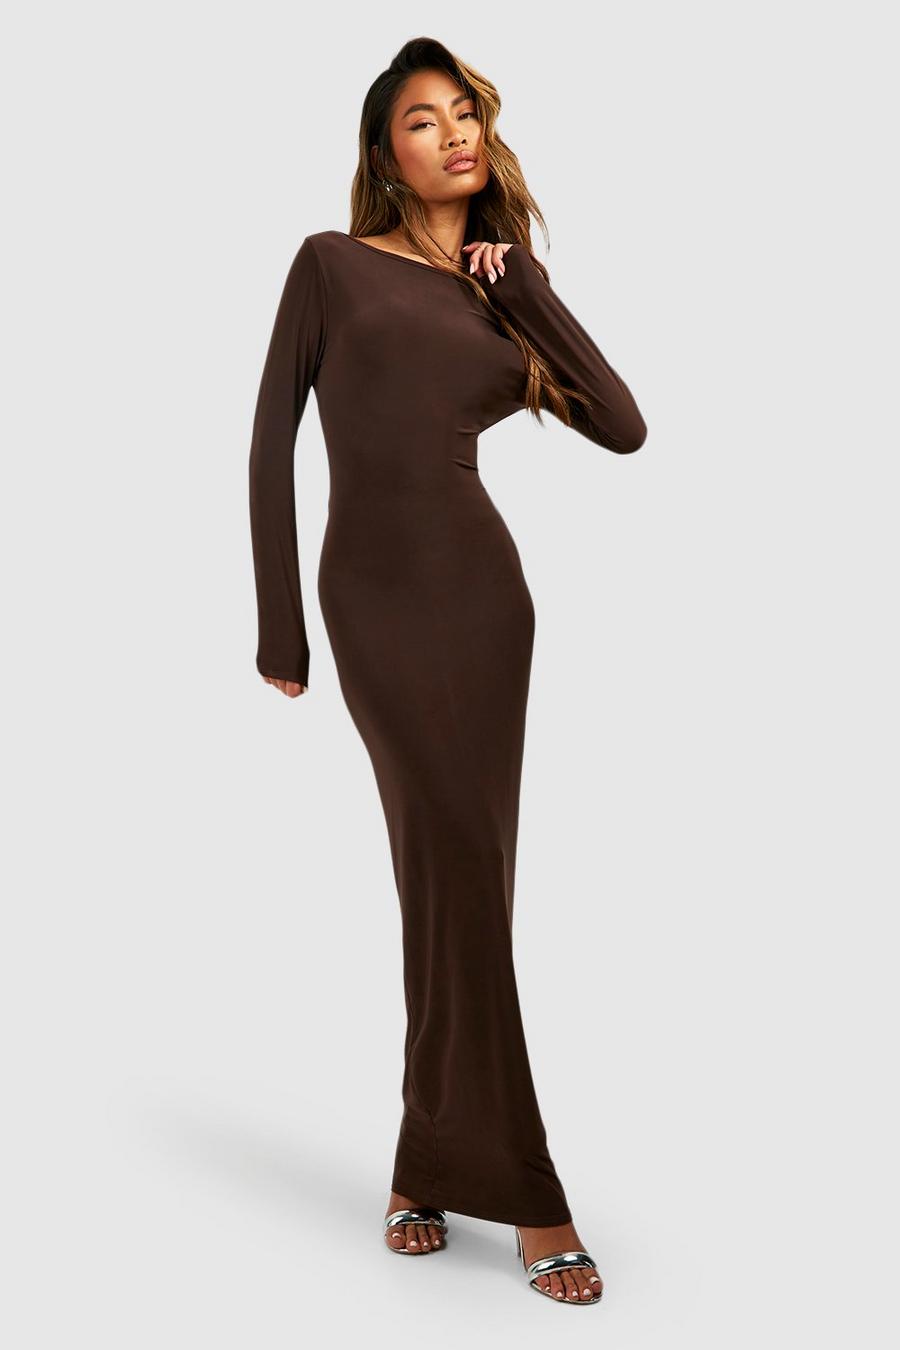 Olive Acetate Slinky Bardot Long Sleeve Maxi Dress